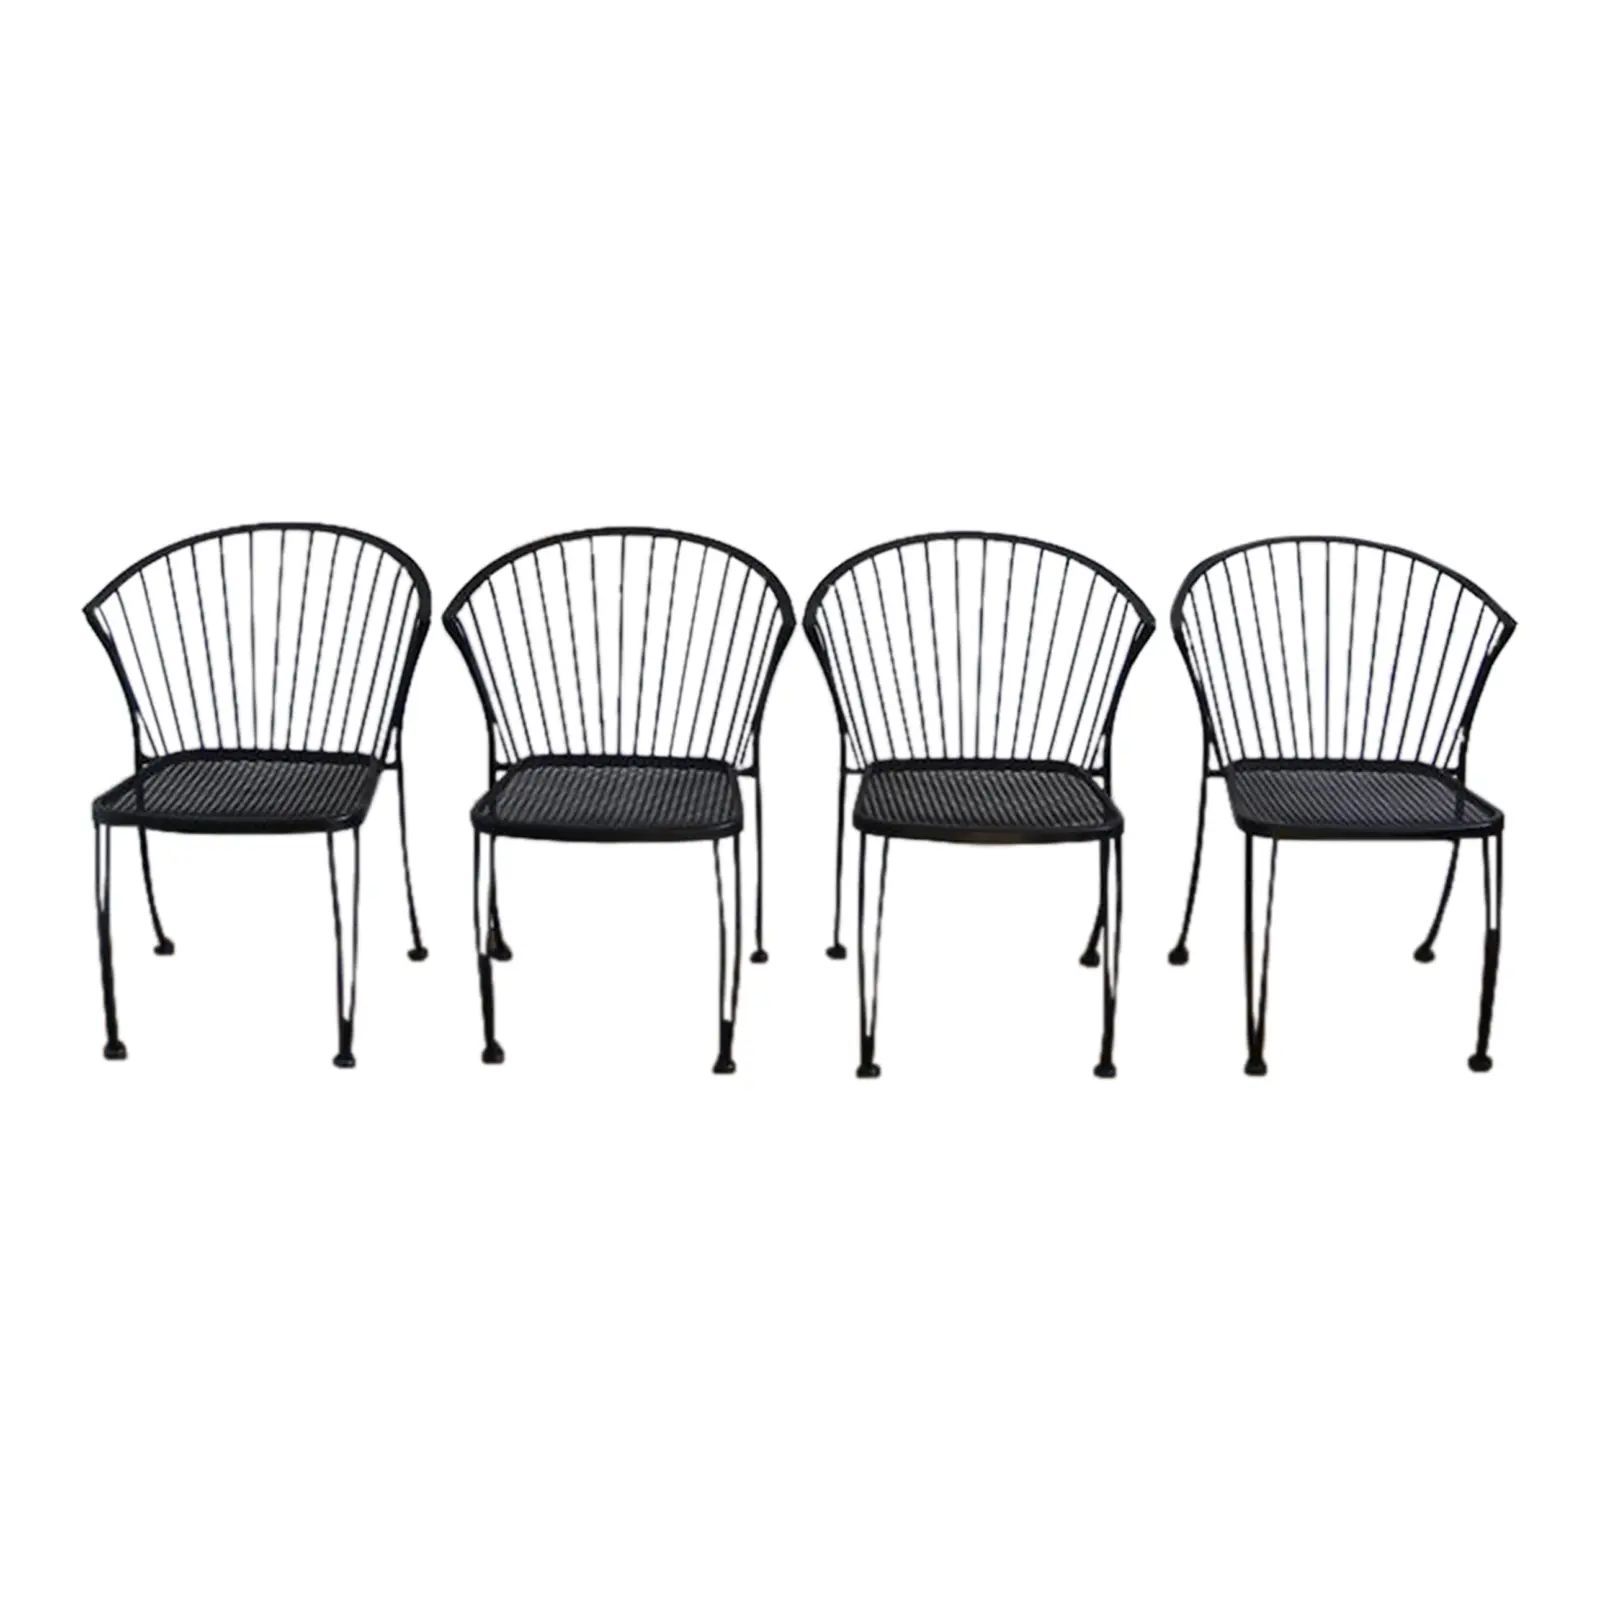 1950s Woodard Pinecrest Dining Chairs - Set of 4 | Chairish